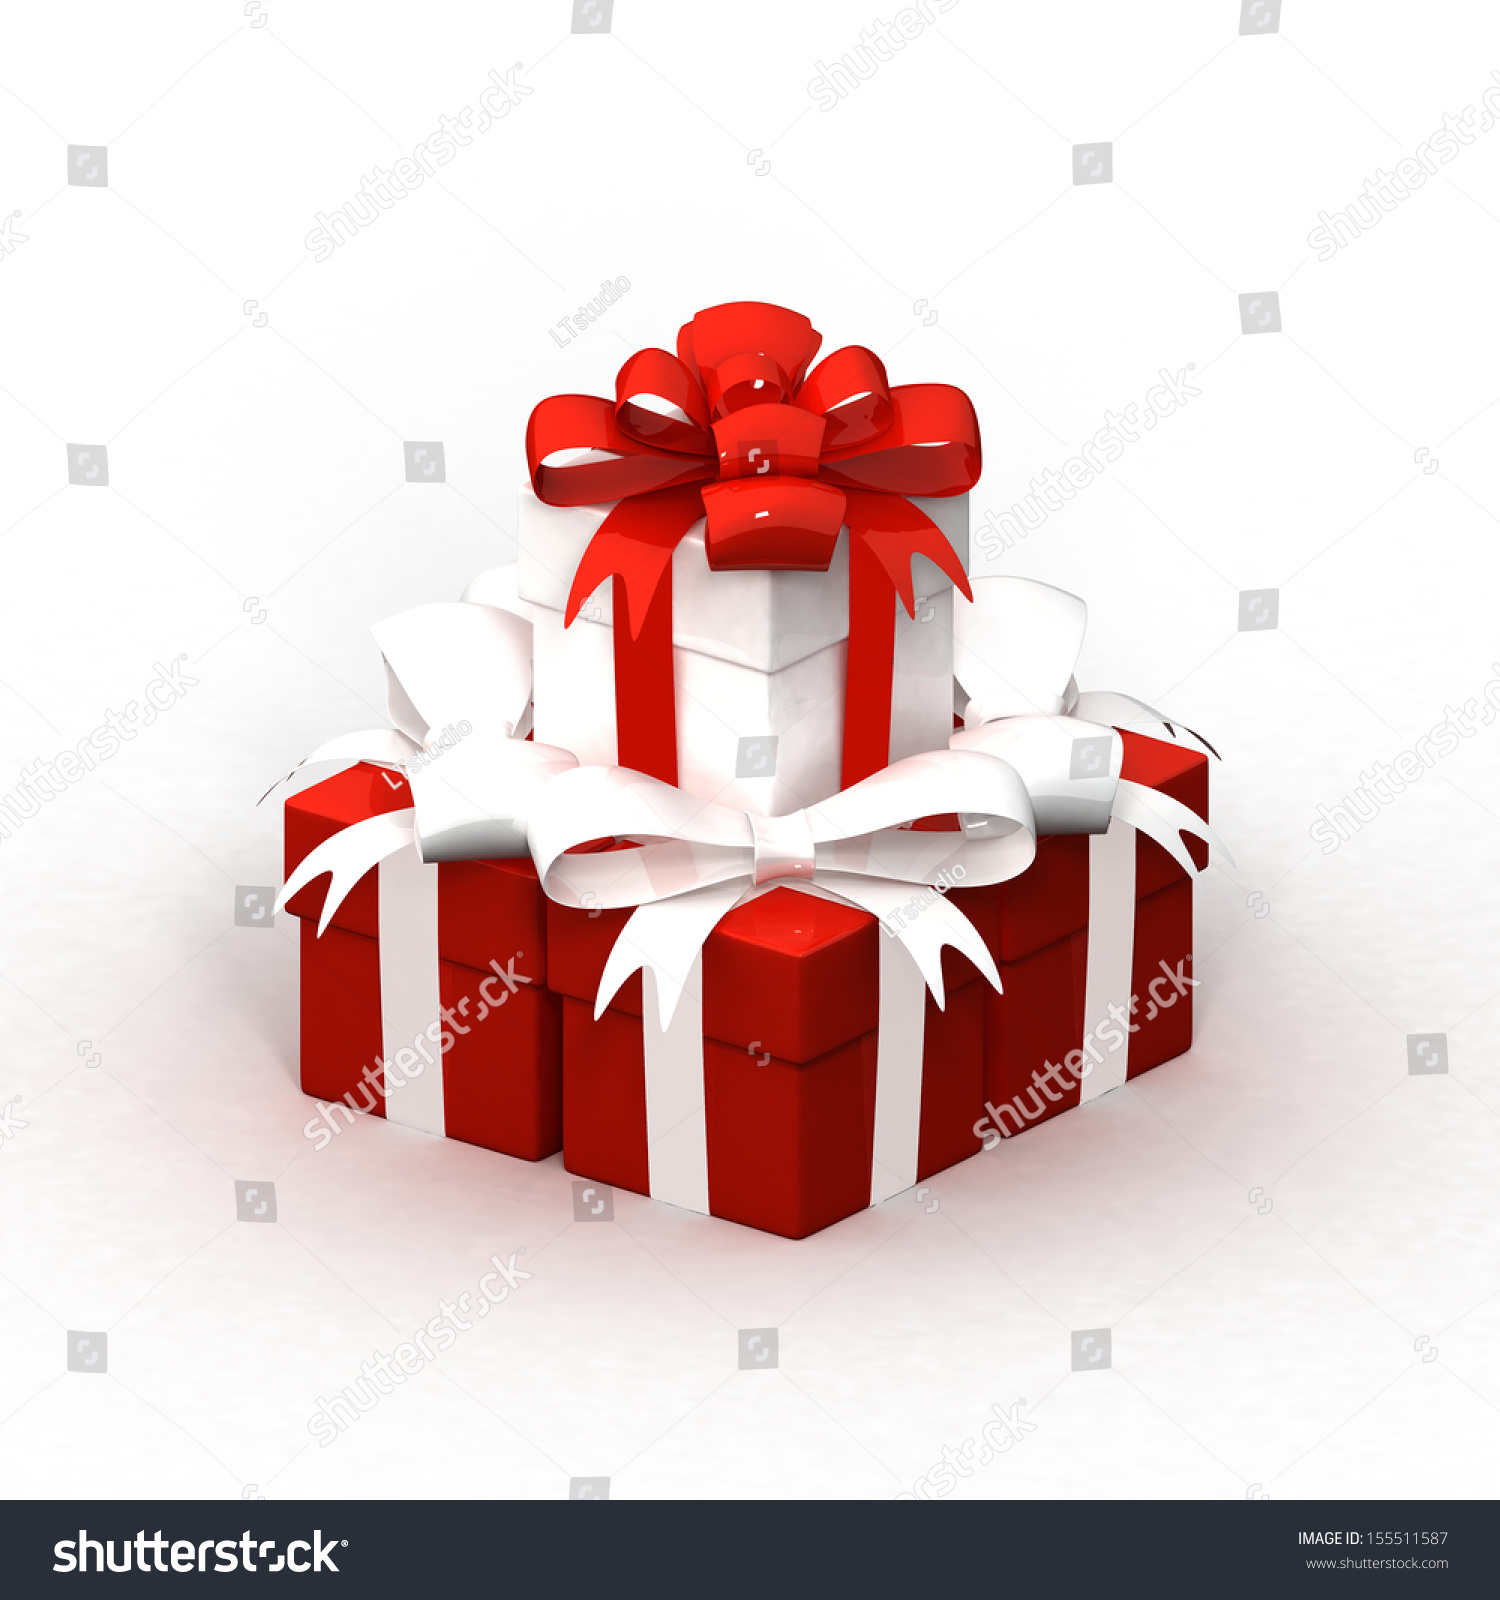 Edit Vectors Free Online - Gift boxes | Shutterstock Editor